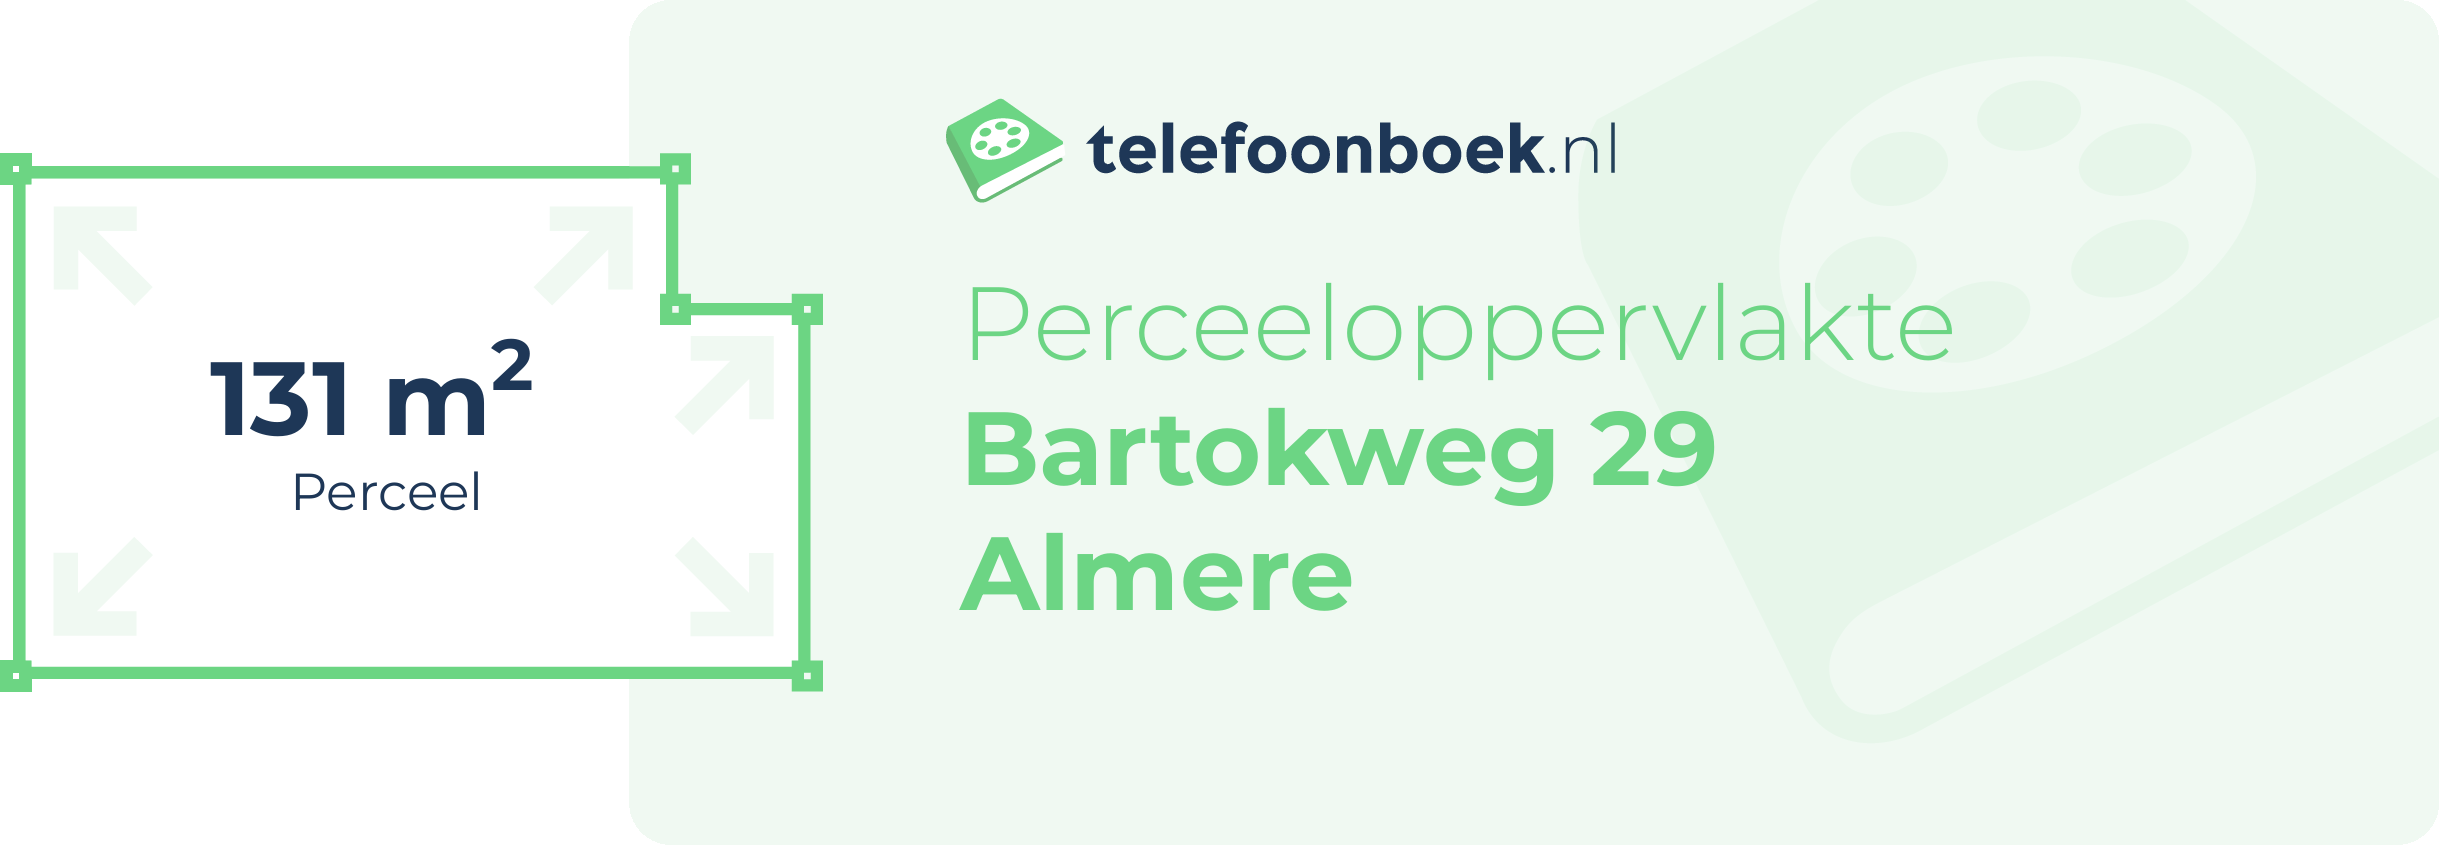 Perceeloppervlakte Bartokweg 29 Almere